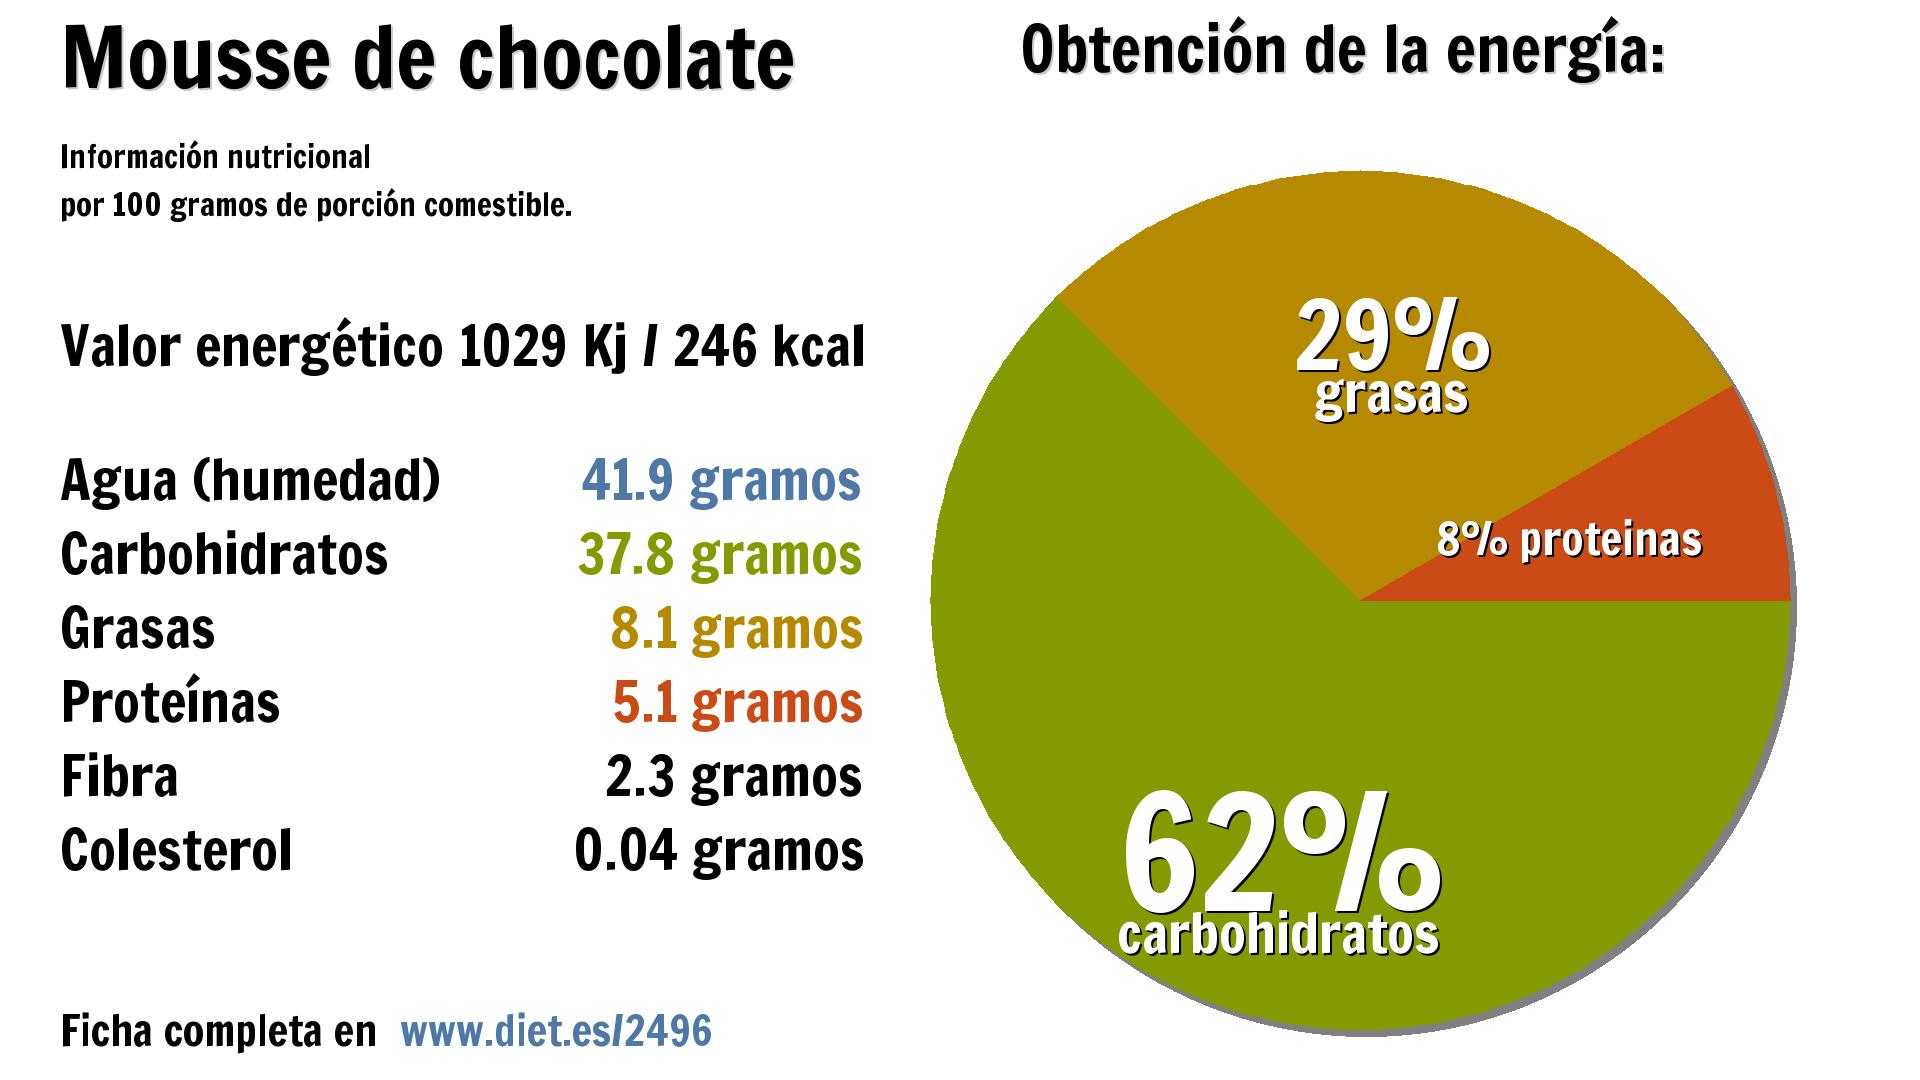 Mousse de chocolate: energía 1029 Kj, agua 42 g., carbohidratos 38 g., grasas 8 g., proteínas 5 g. y fibra 2 g.